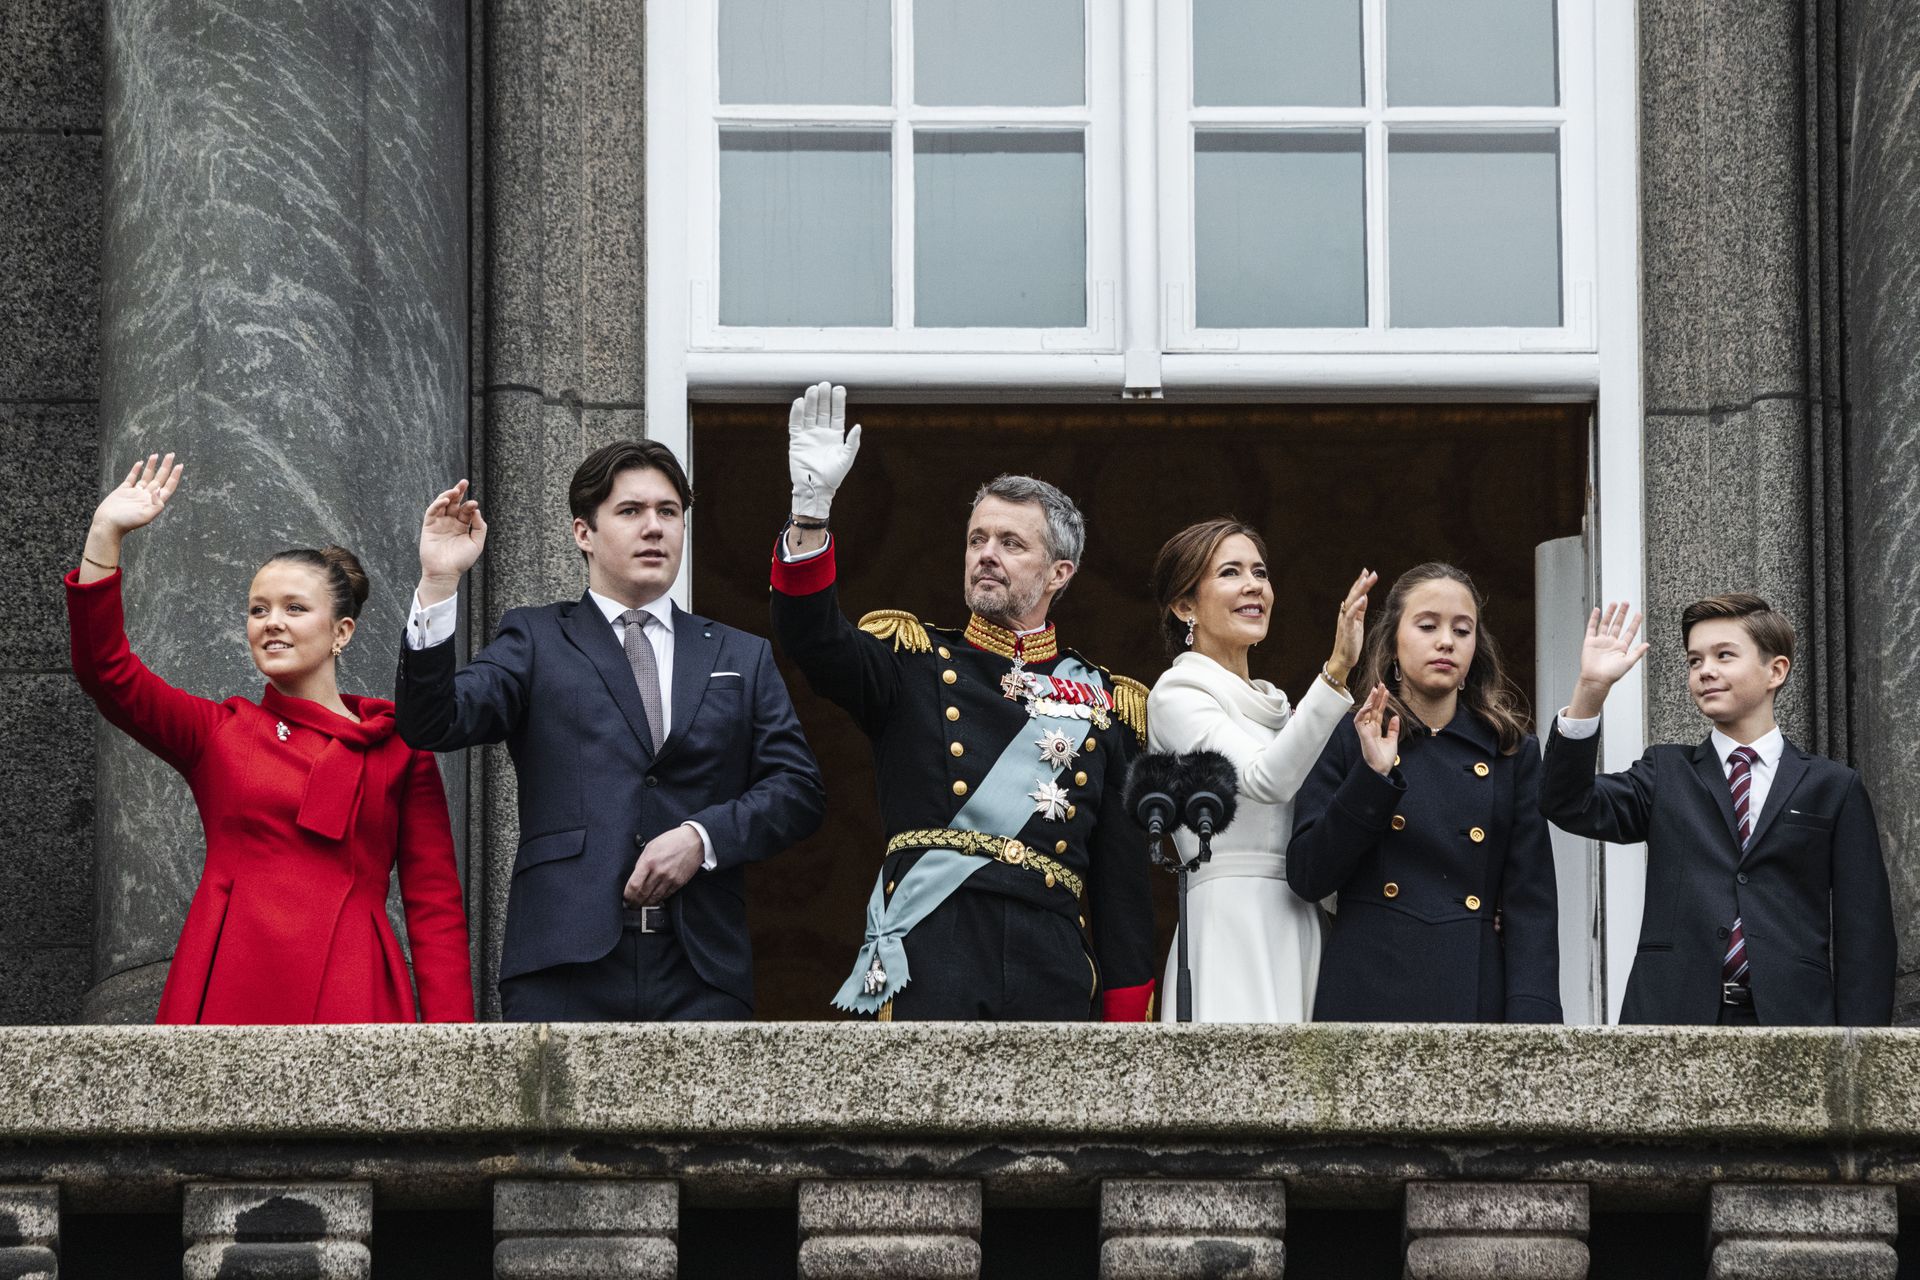 Koning Frederik, koningin Mary, kroonprins Christian, prinses Isabella, prins Vincent en prinses Josephine staan samen op het balkon.